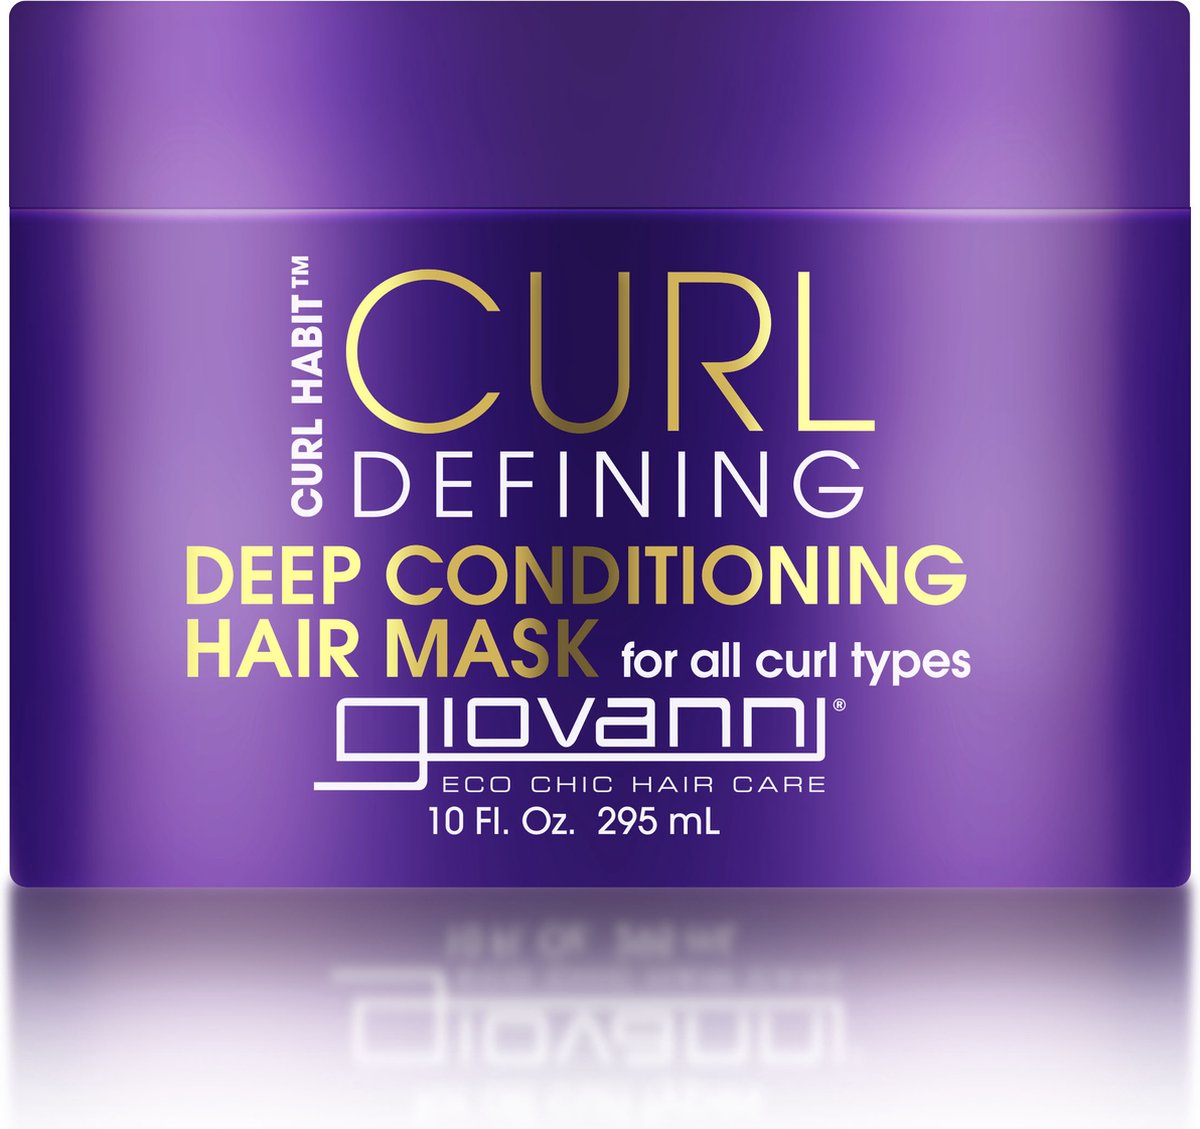 Giovanni Cosmetics-Curl Habit - Deep Conditioning & Curl Defining Hair Mask - 295ml